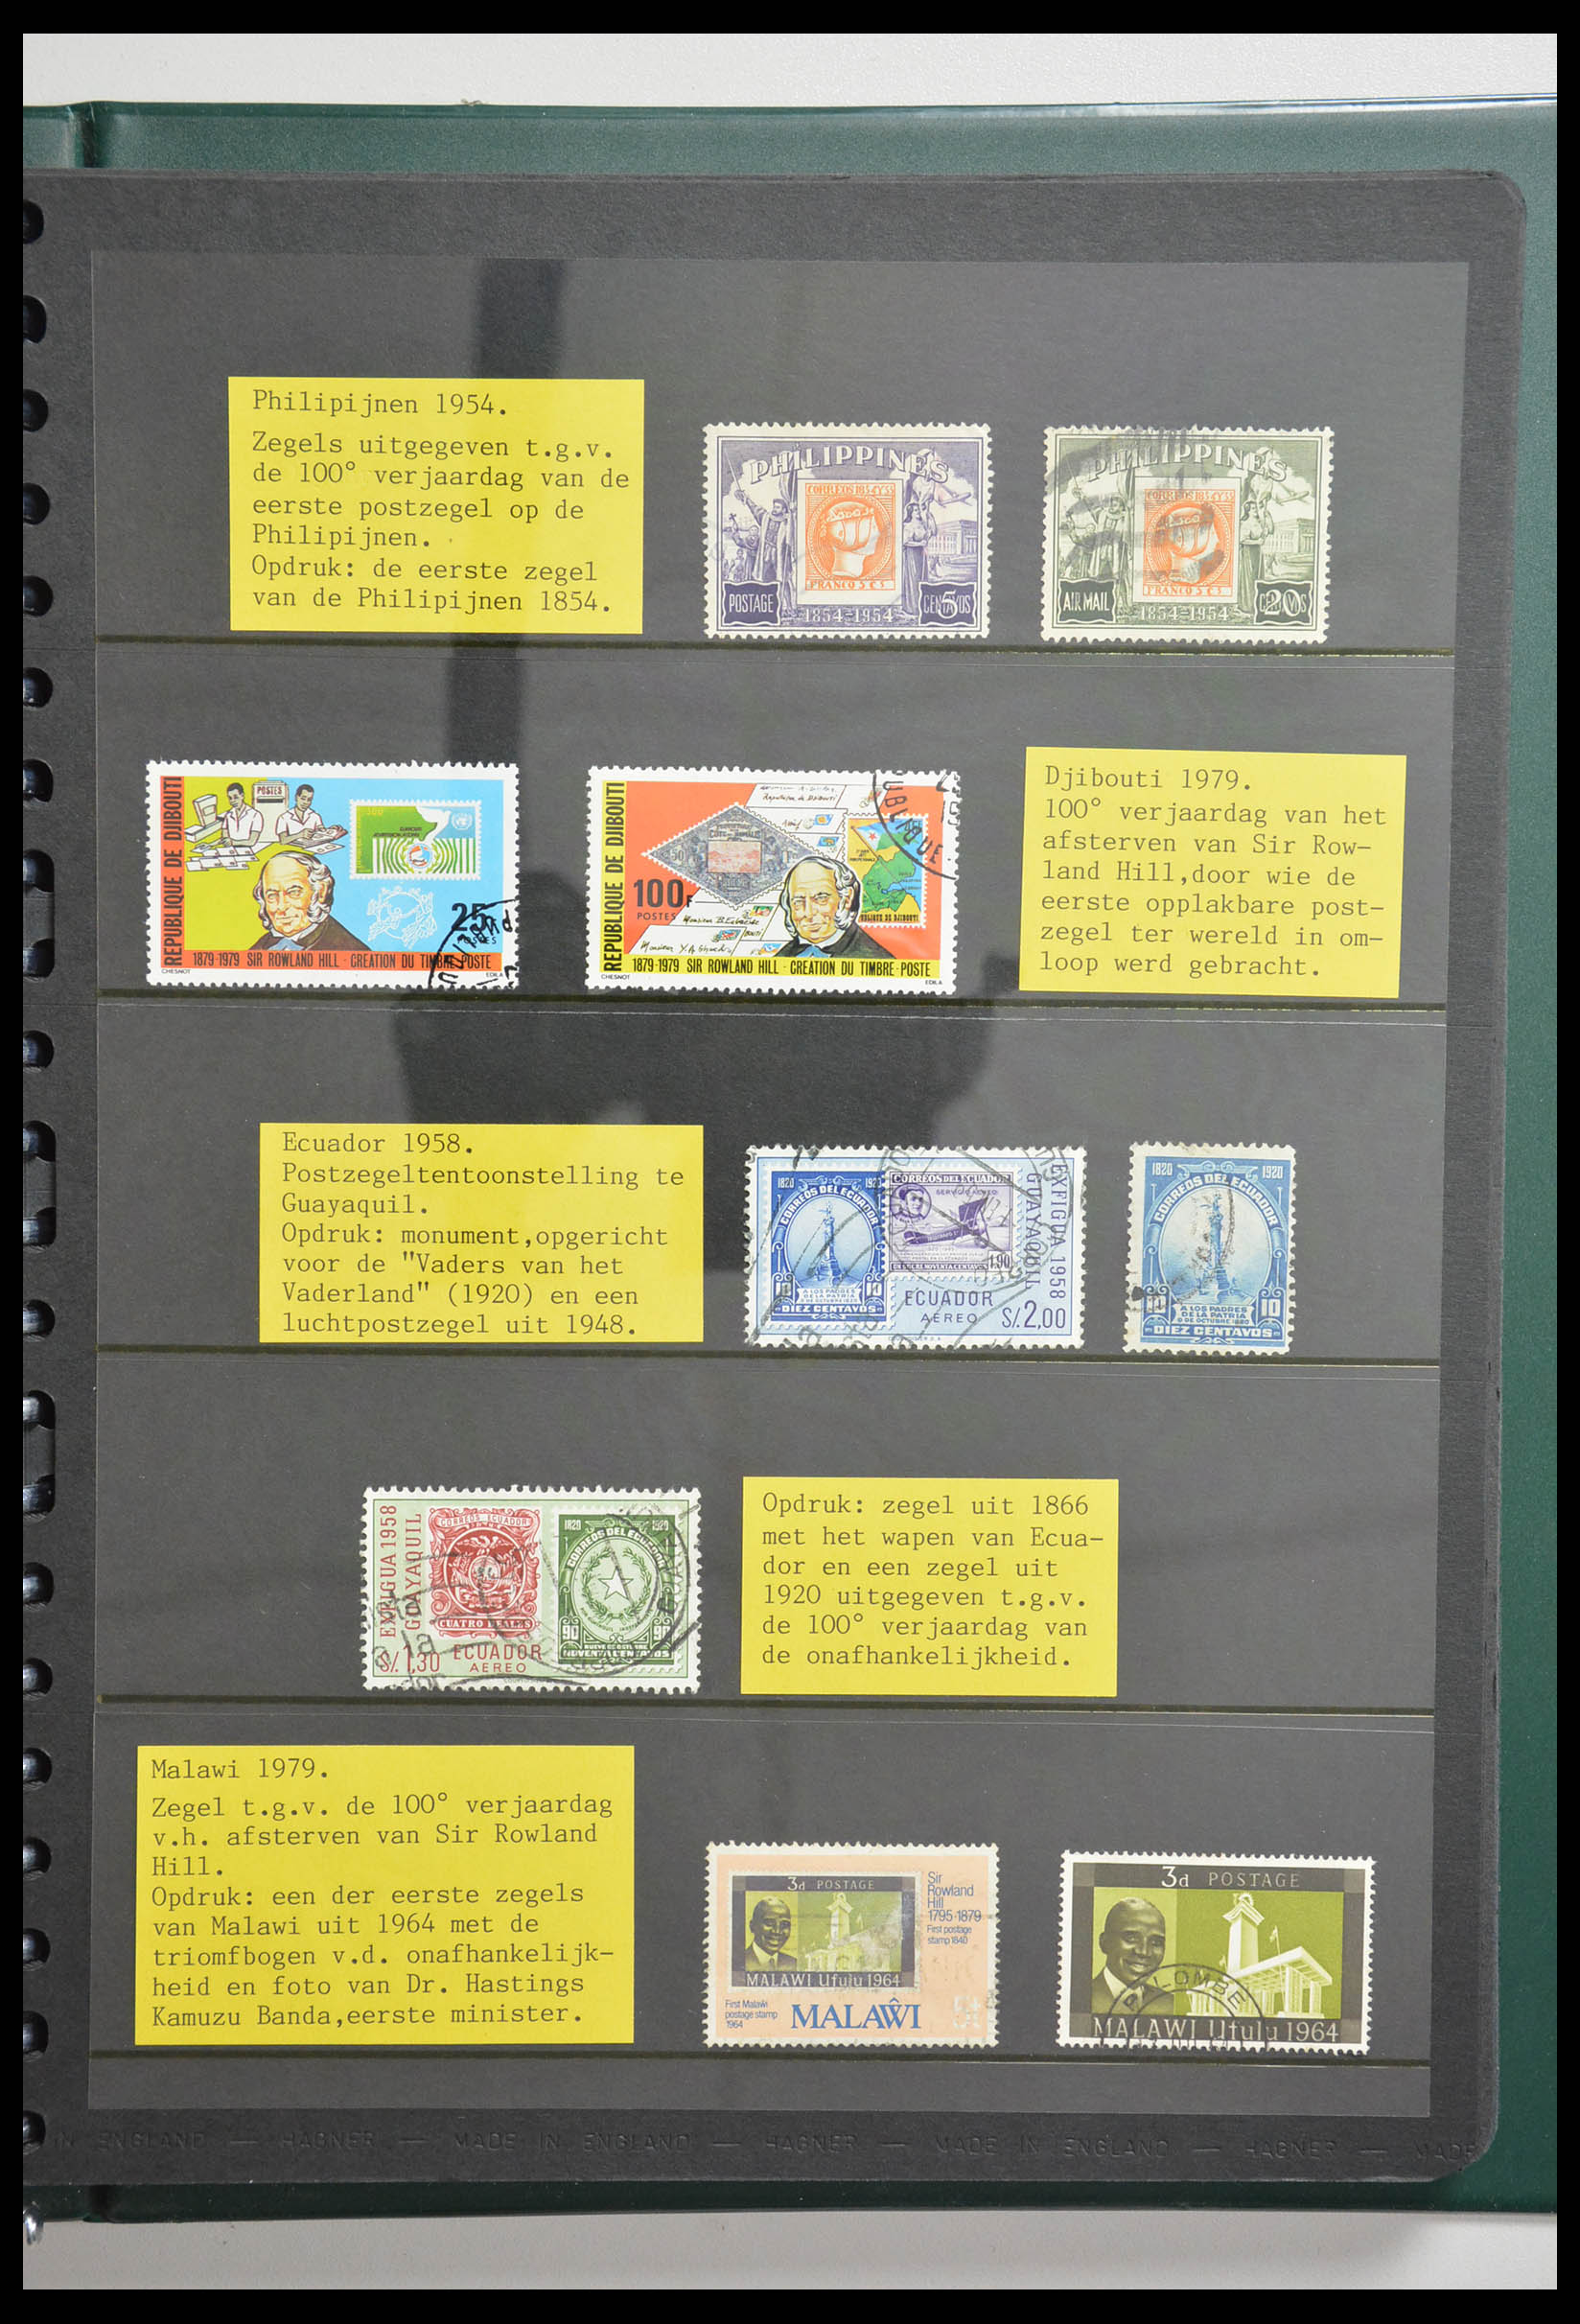 28337 104 - 28337 Postzegel op postzegel 1840-2001.